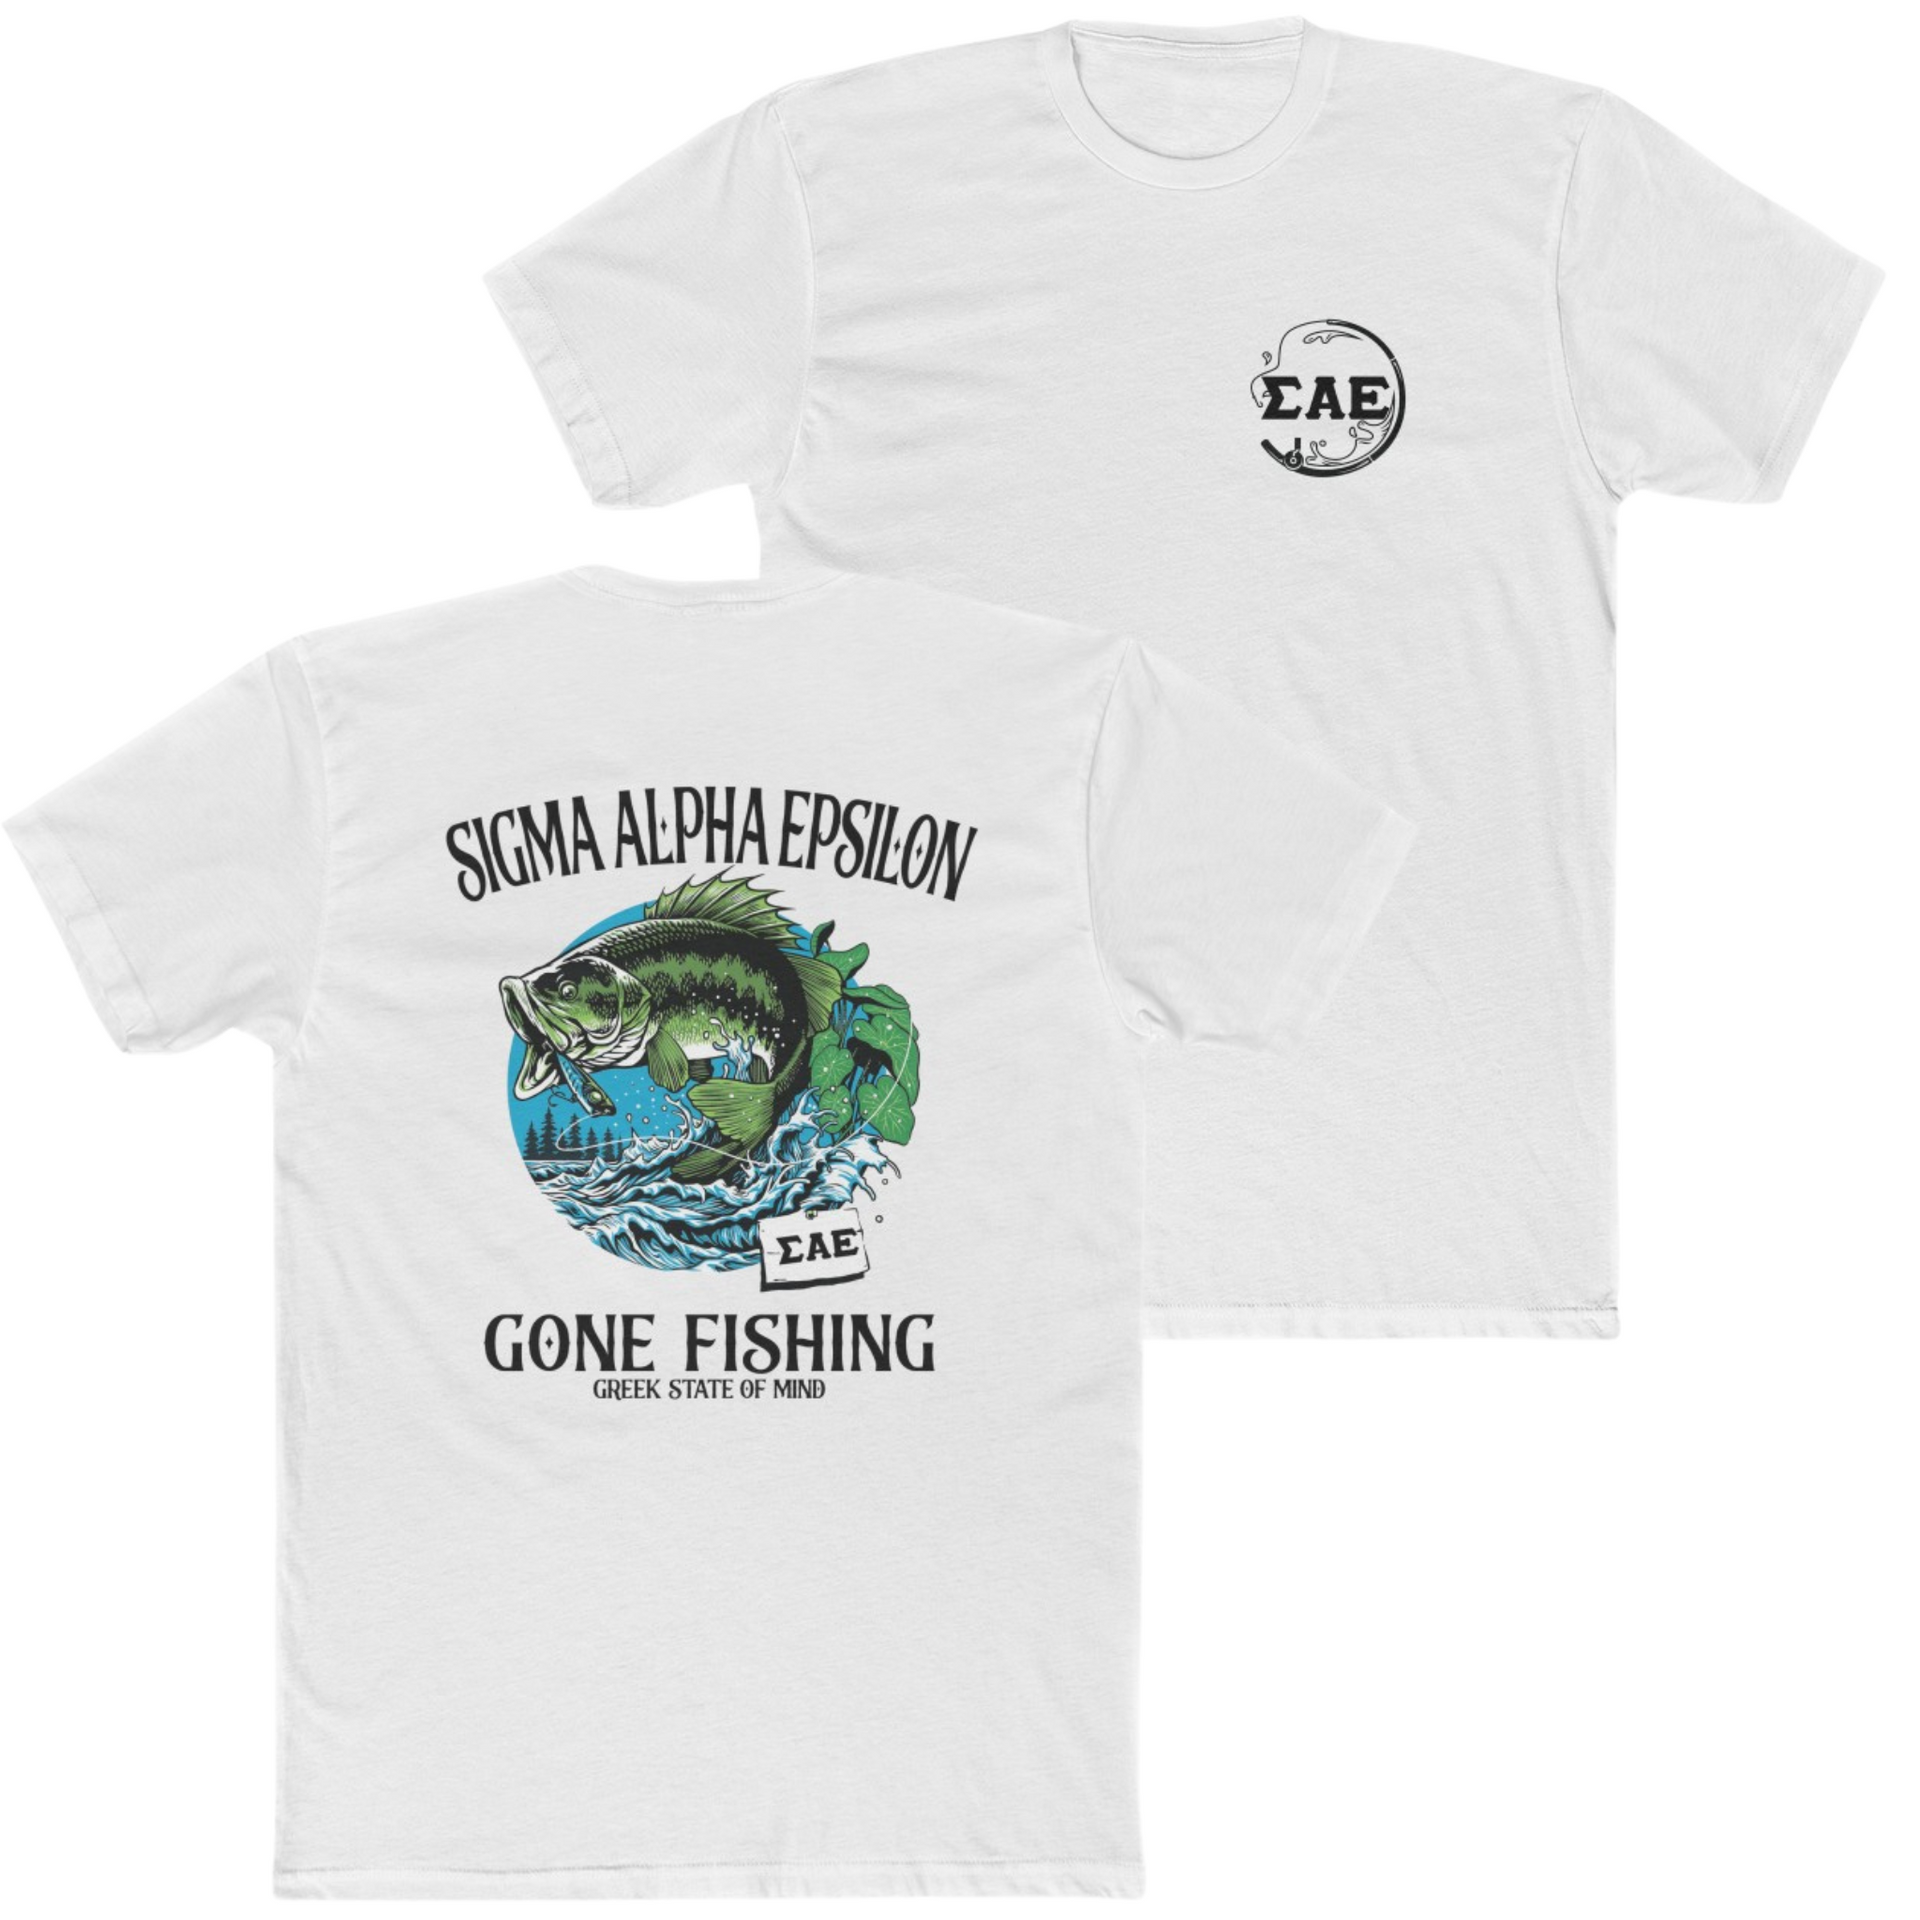 White Sigma Alpha Epsilon Graphic T-Shirt | Gone Fishing | Sigma Alpha Epsilon Clothing and Merchandise